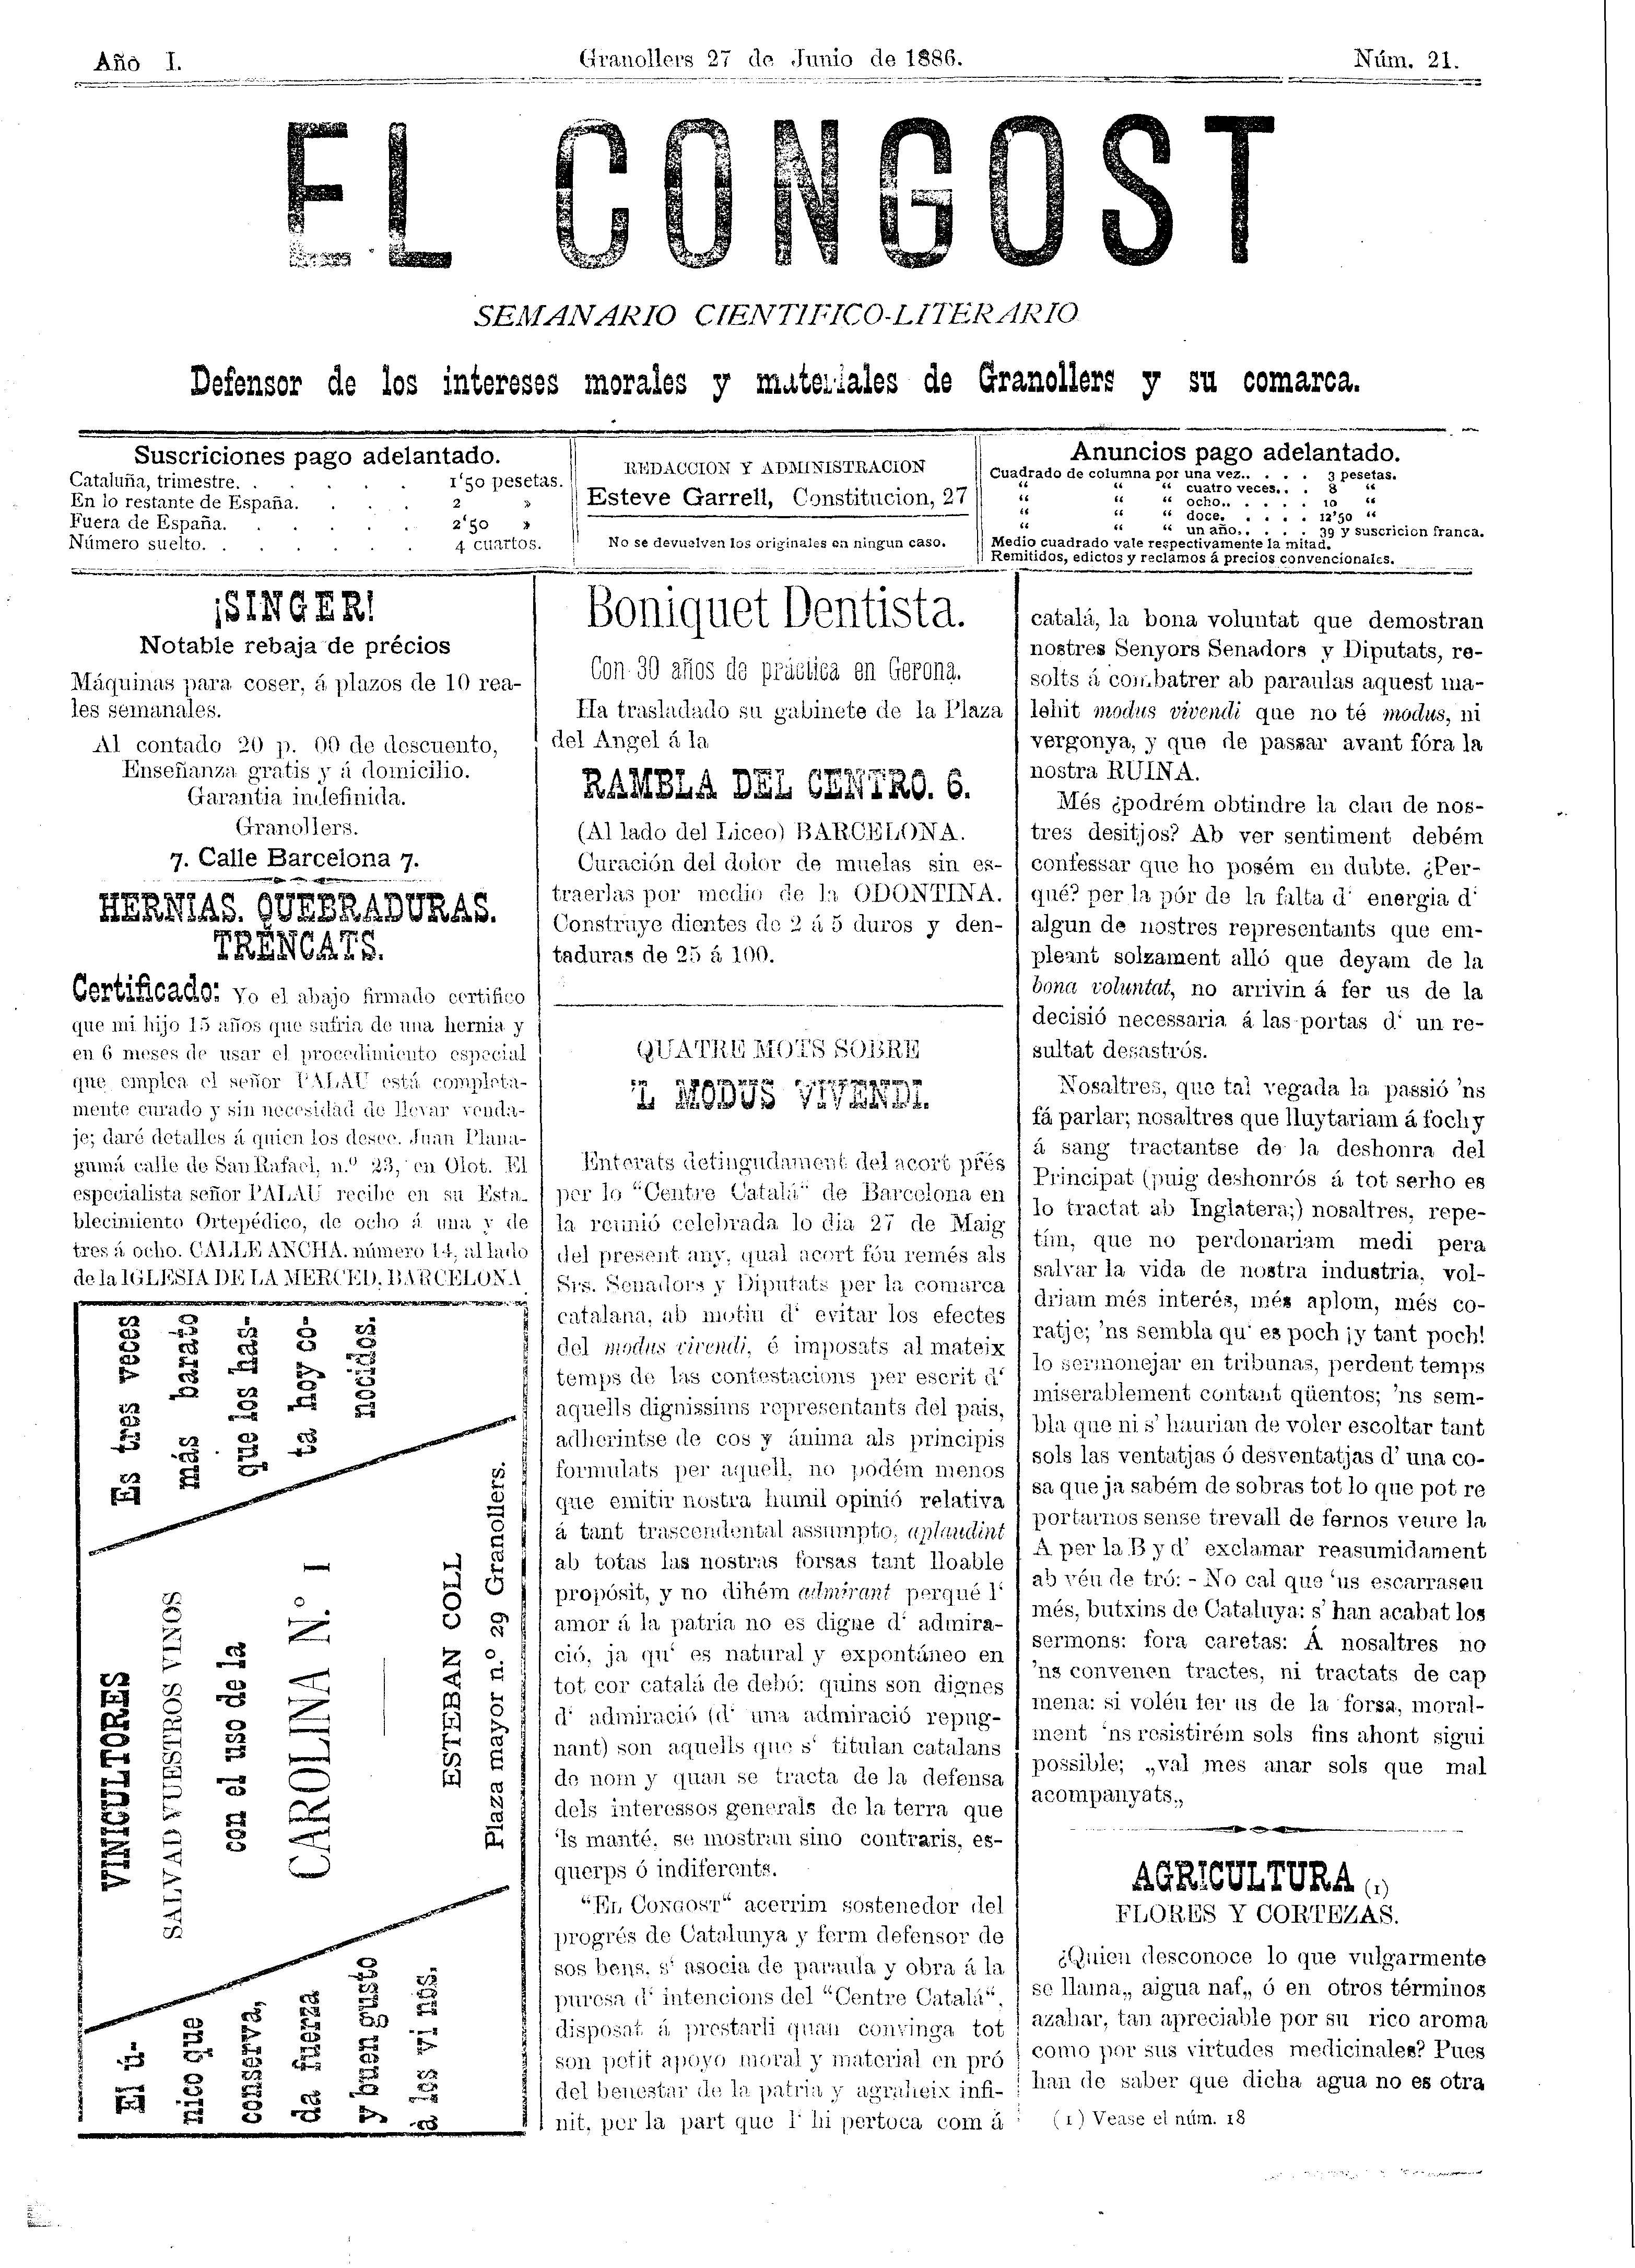 El Congost, 27/6/1886 [Ejemplar]